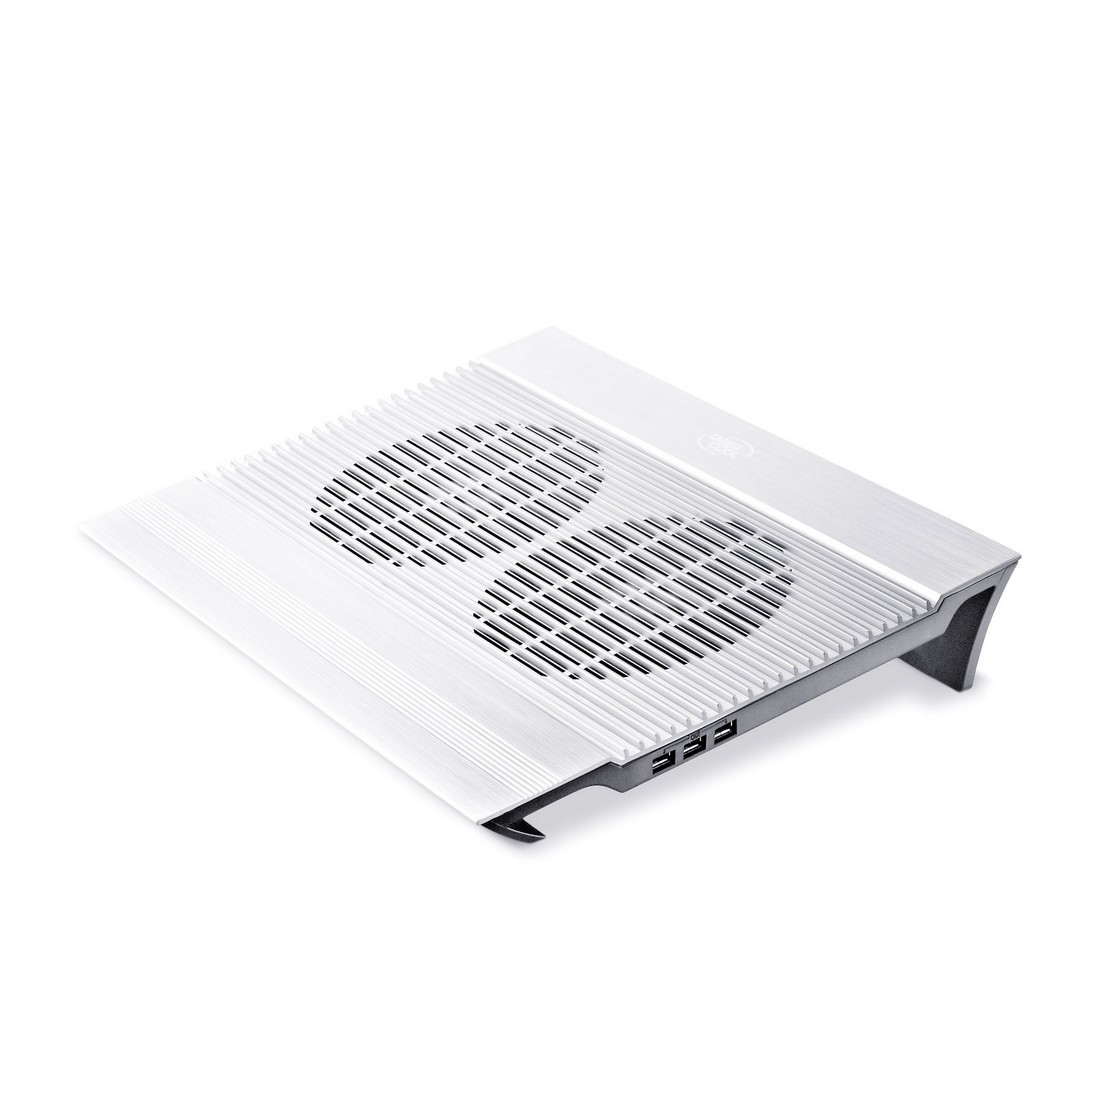 Охлаждающая подставка для ноутбука  Deepcool  N8 Silver DP-N24N-N8SR  17" Серебристый